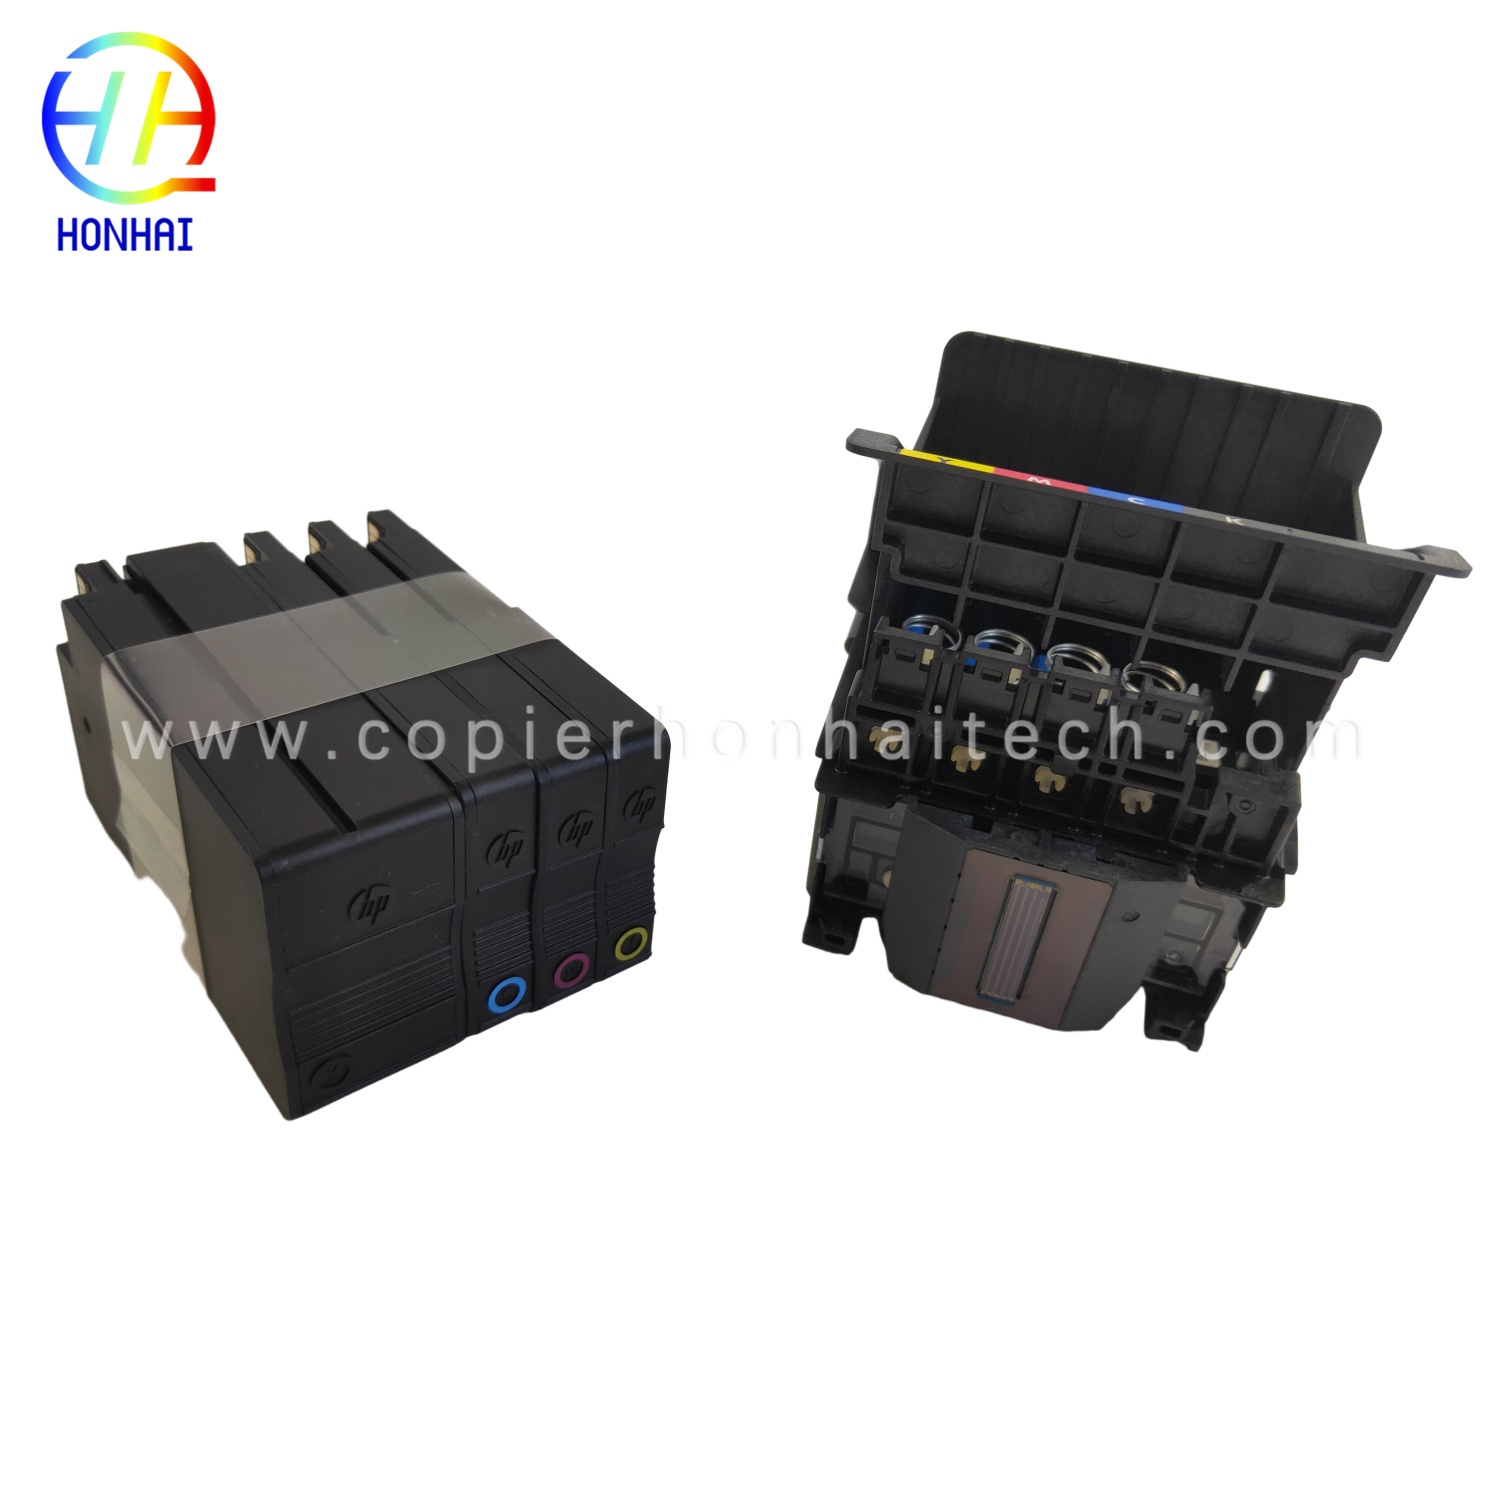 https://www.copierhonhaitech.com/original-new-gd-c1q10a-elp-garuda-printing-head-eplacement-kit-for-hp-designjet-t120-t125-t130-t520-t525-t530-product/